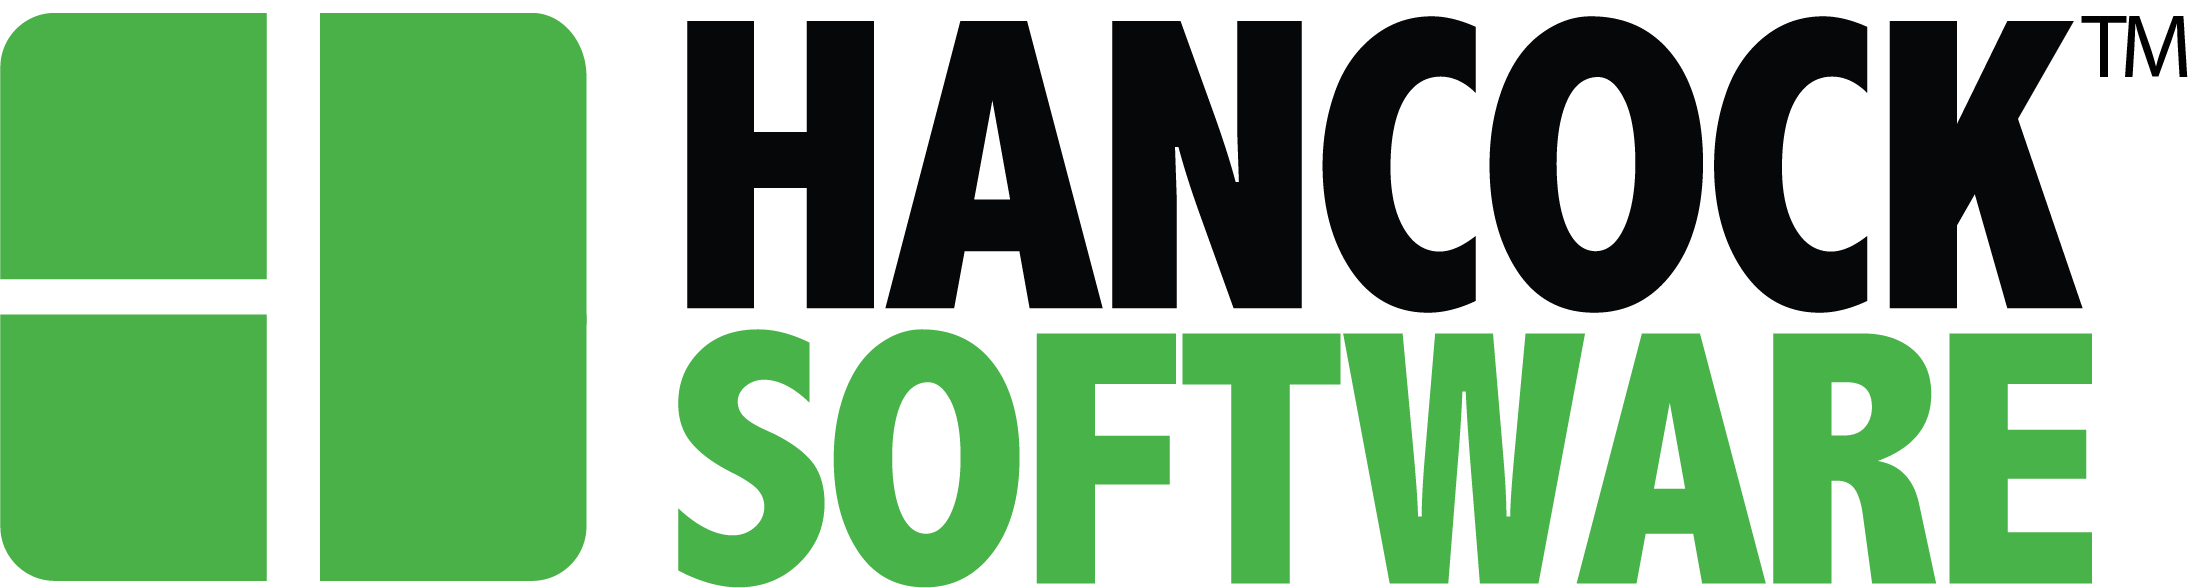 Hancock Software, Inc.